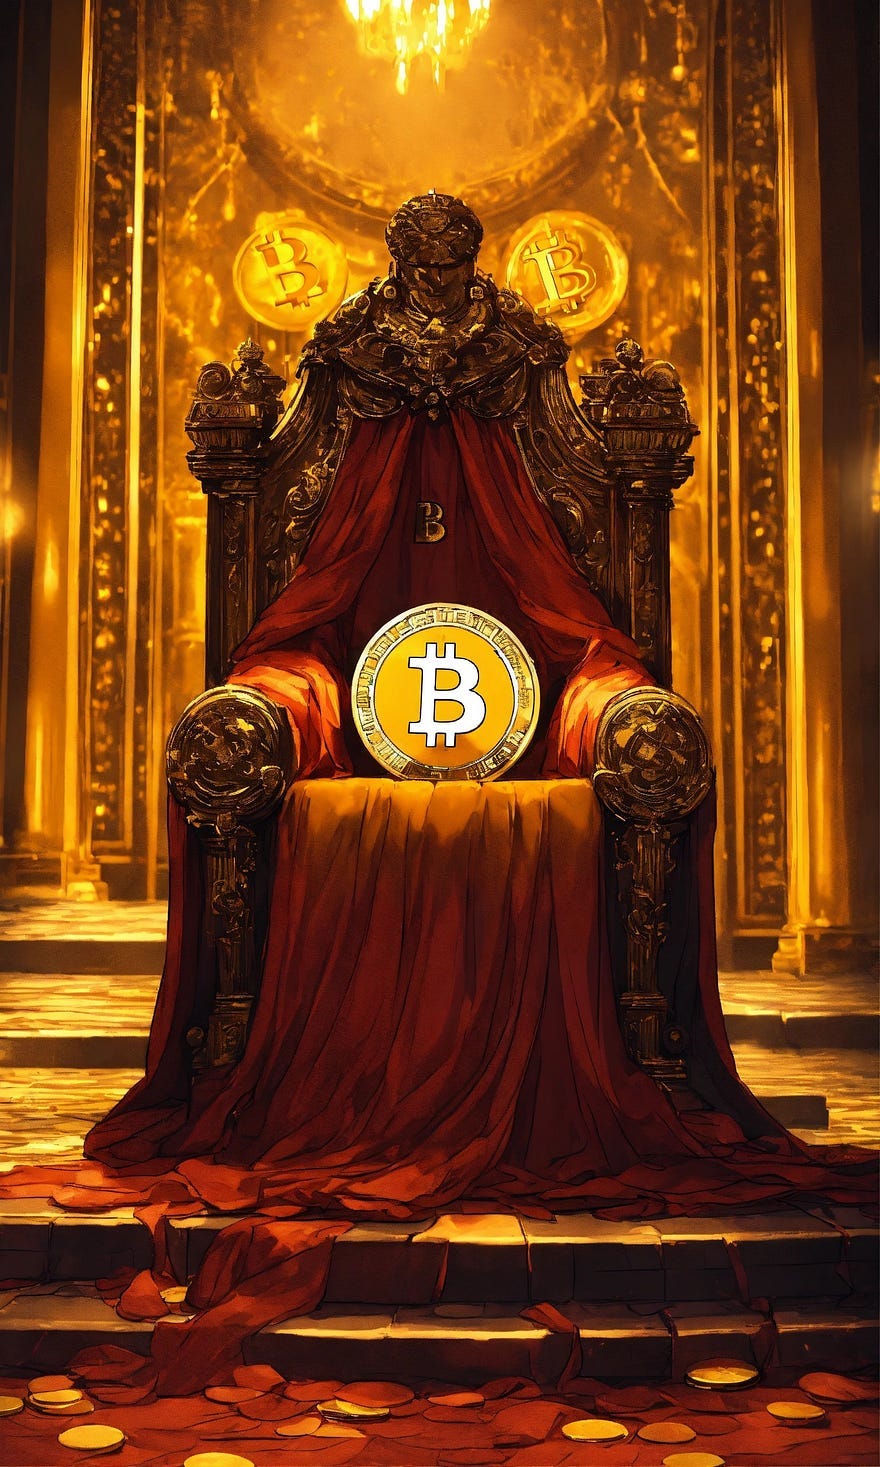 More crypto and bitcoin